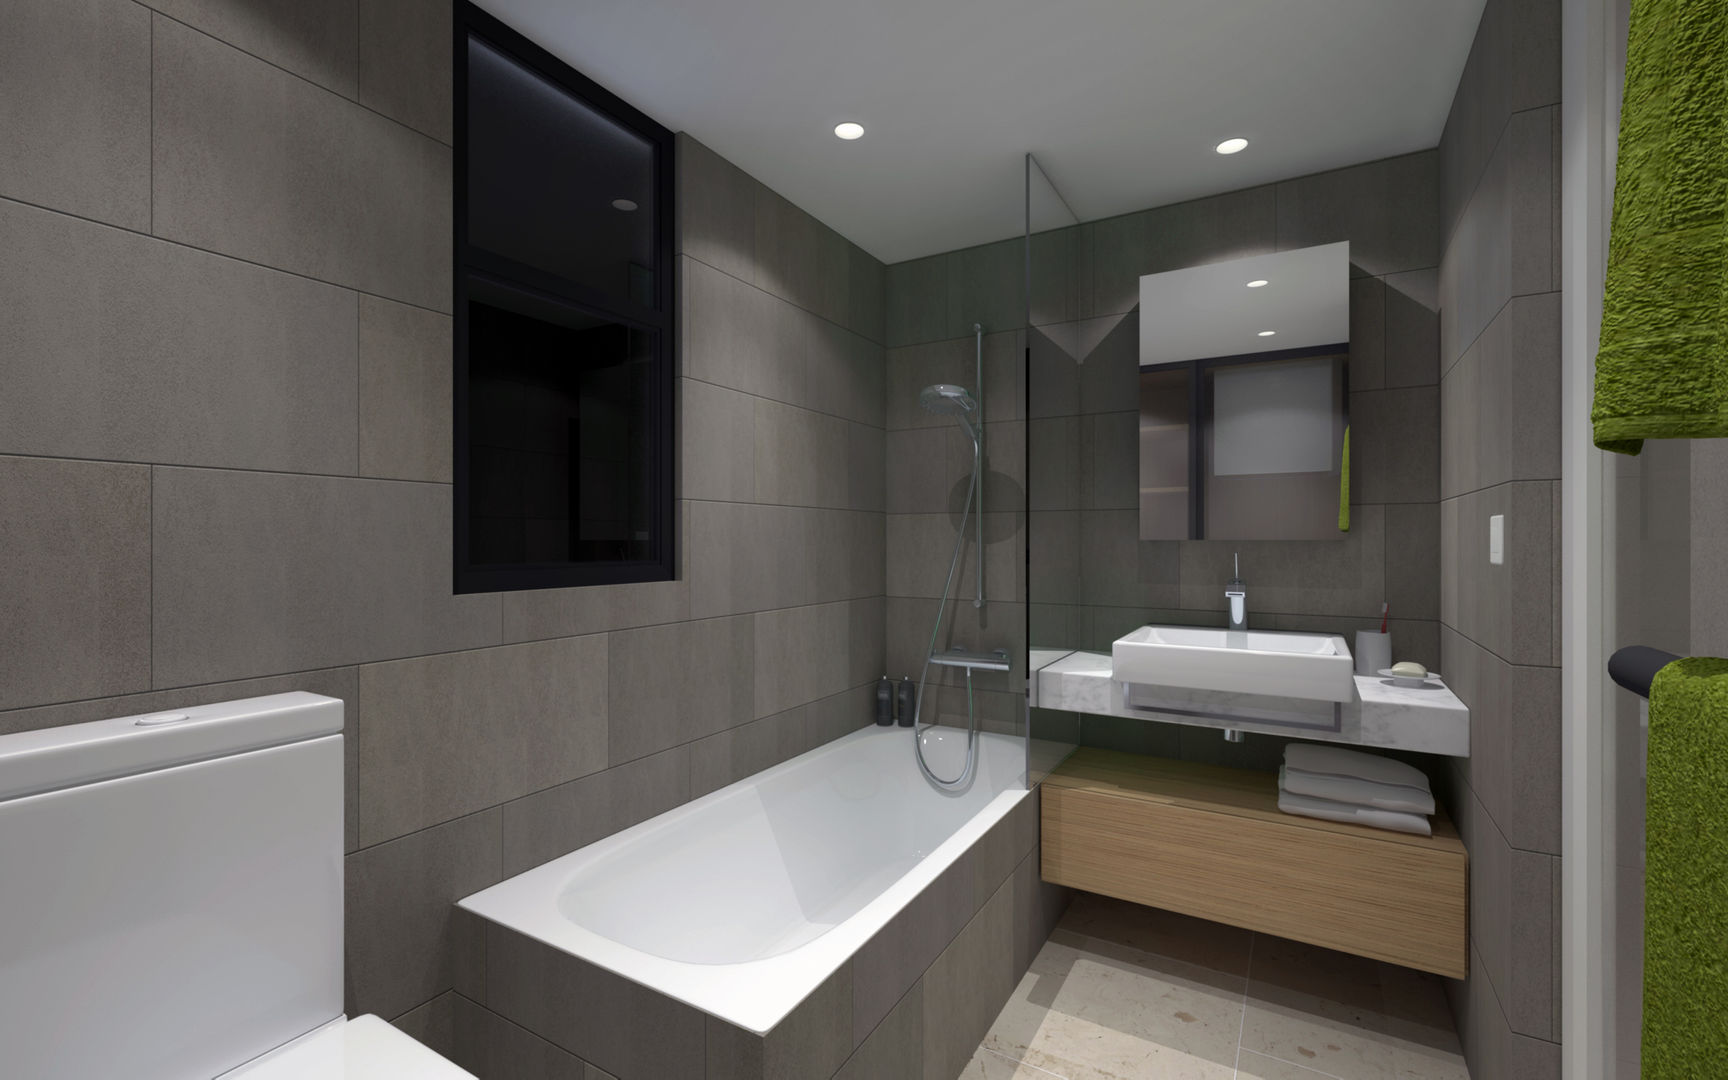 LT's RESIDENCE, arctitudesign arctitudesign Minimalist style bathroom Tap,Property,Building,Plumbing fixture,Bathroom,Comfort,Bathtub,Interior design,Fixture,Floor